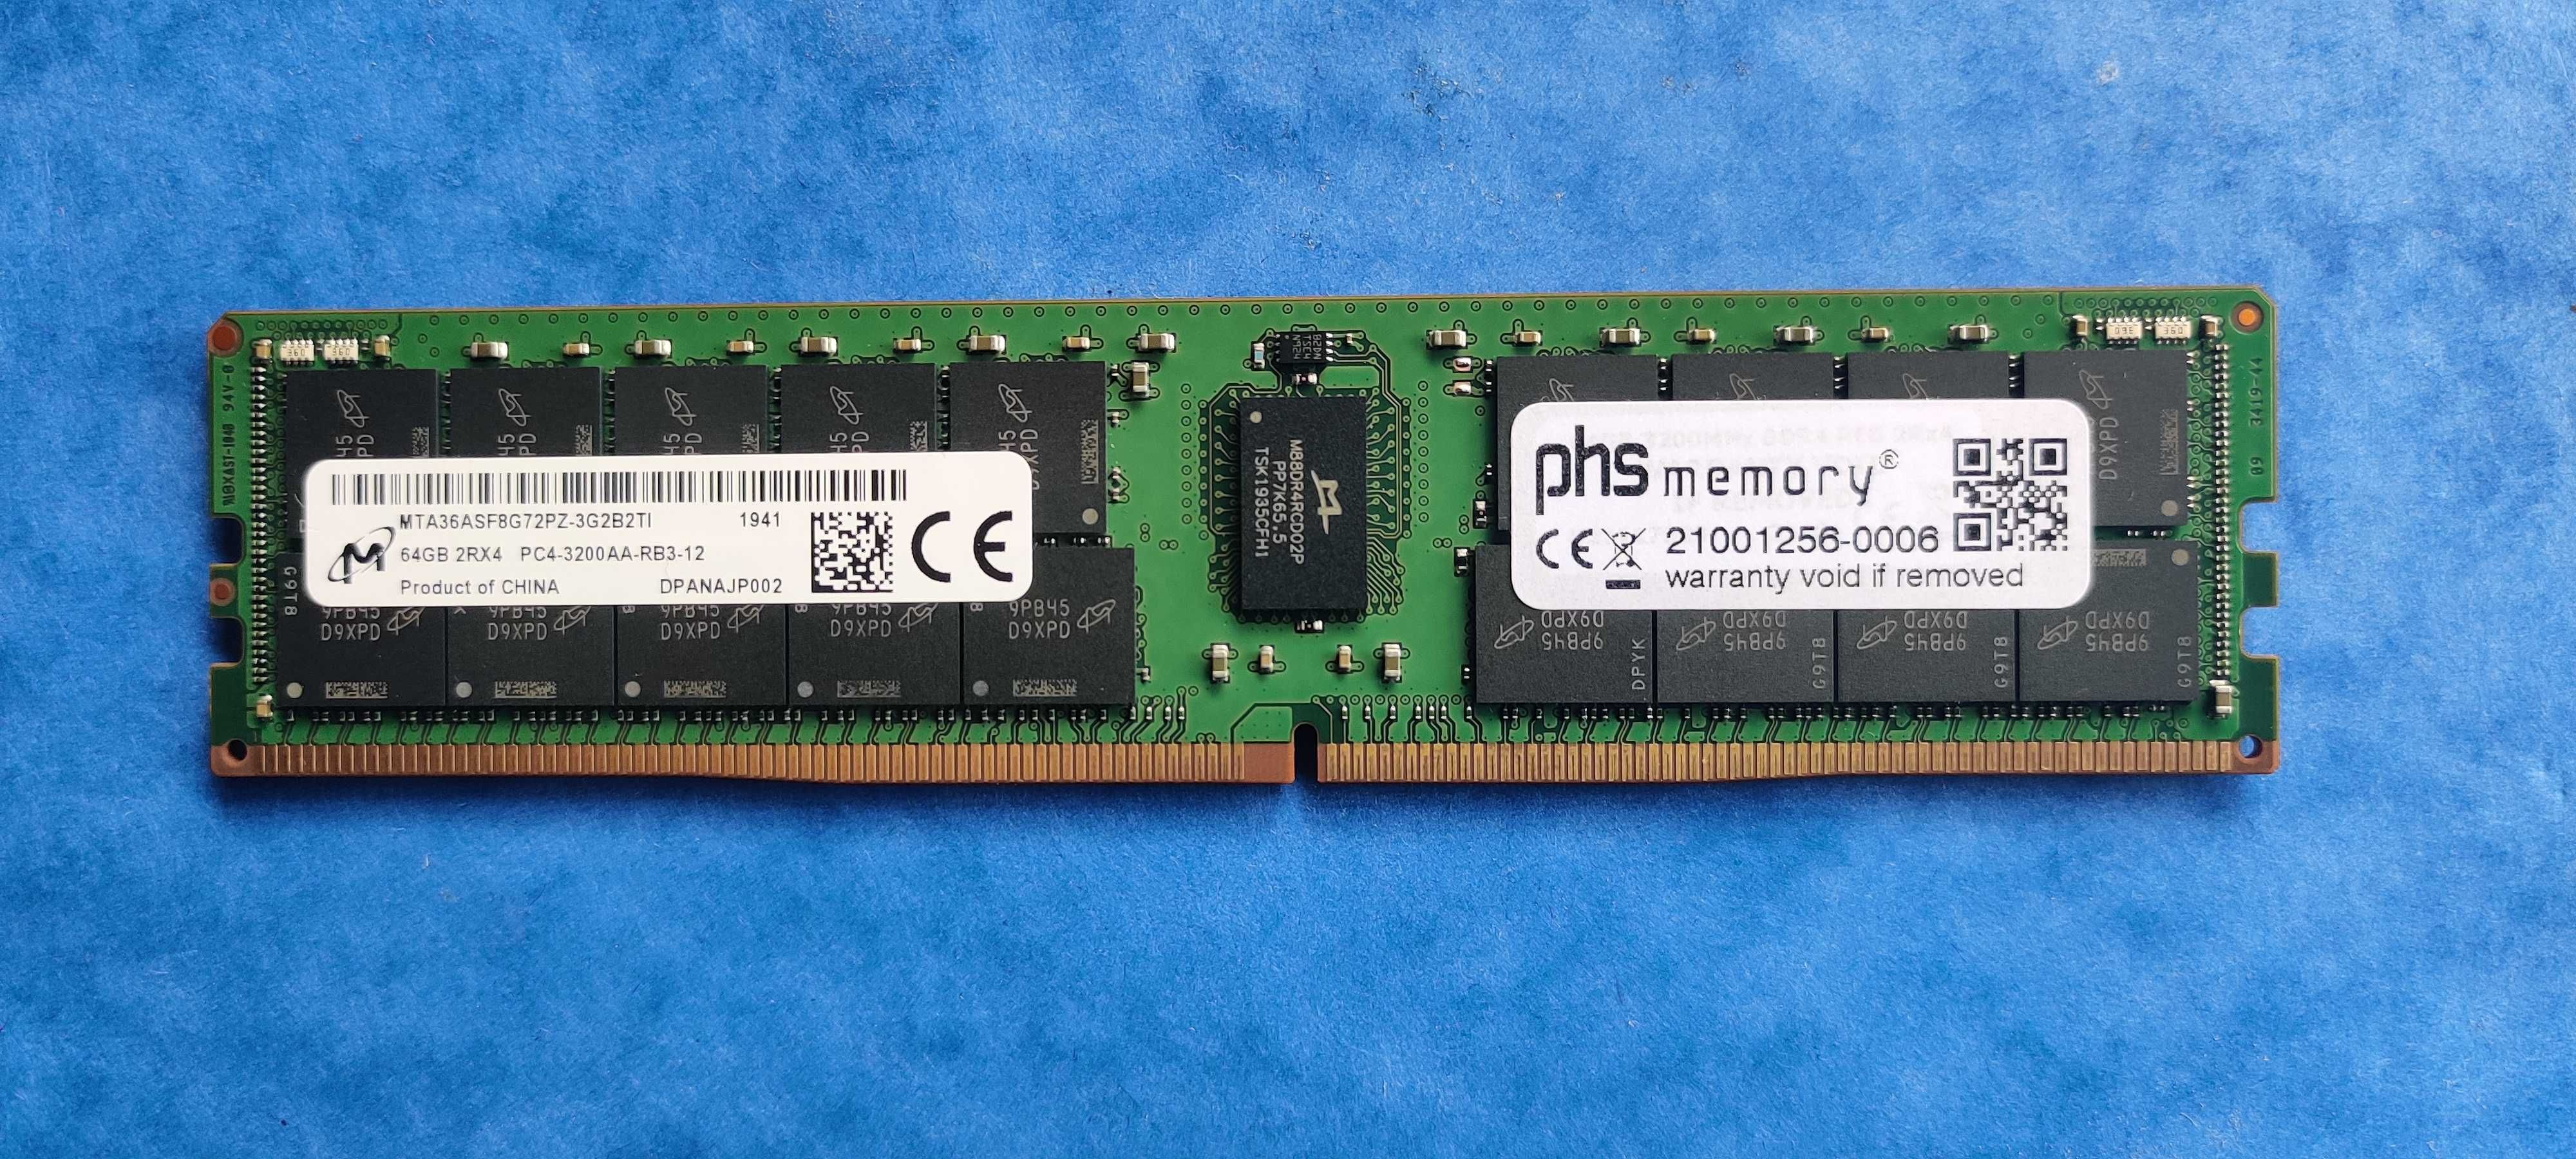 64 Gb DDR4 PHS Memory